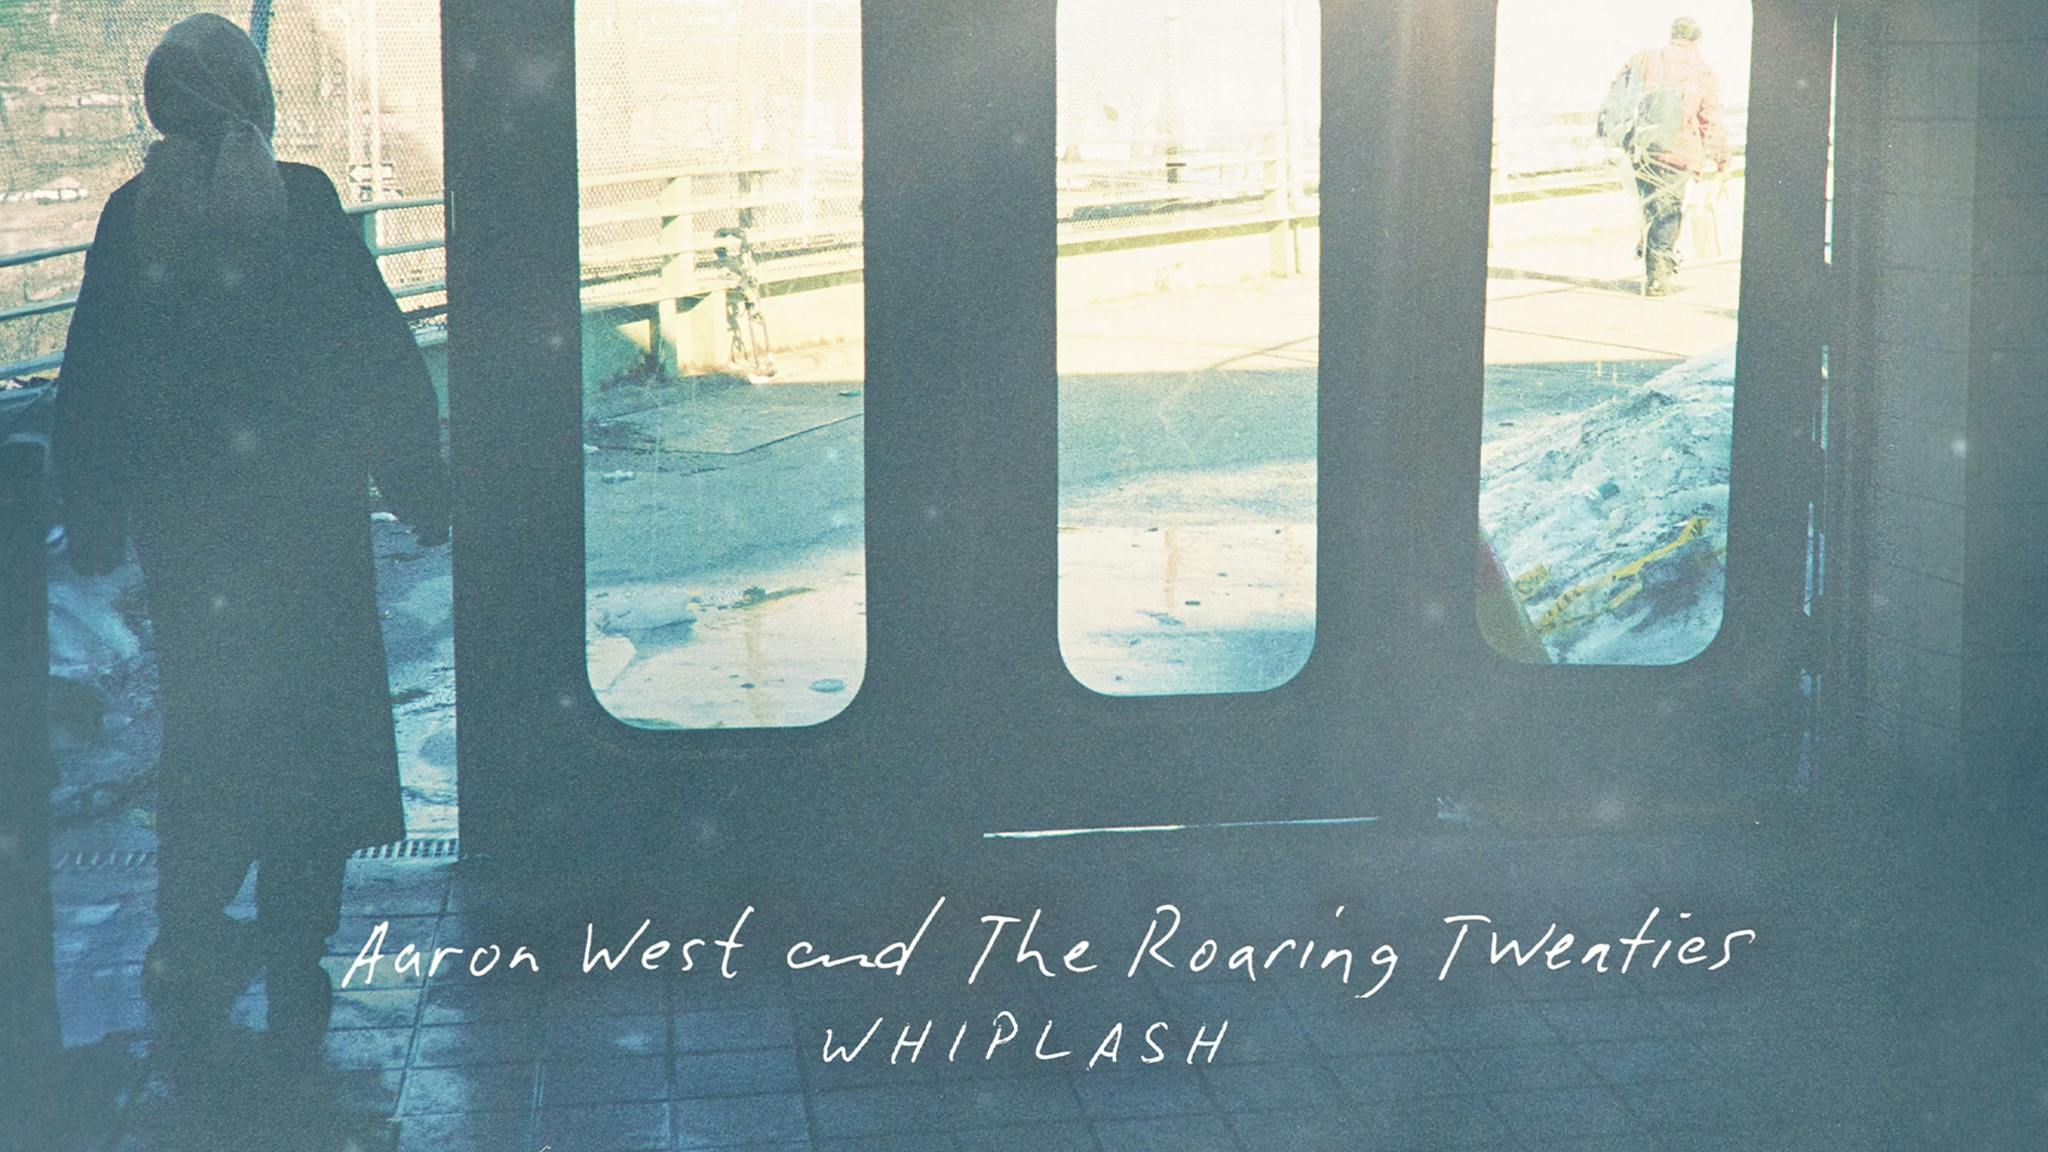 Listen to Aaron West And The Roaring Twenties’ new single, Whiplash